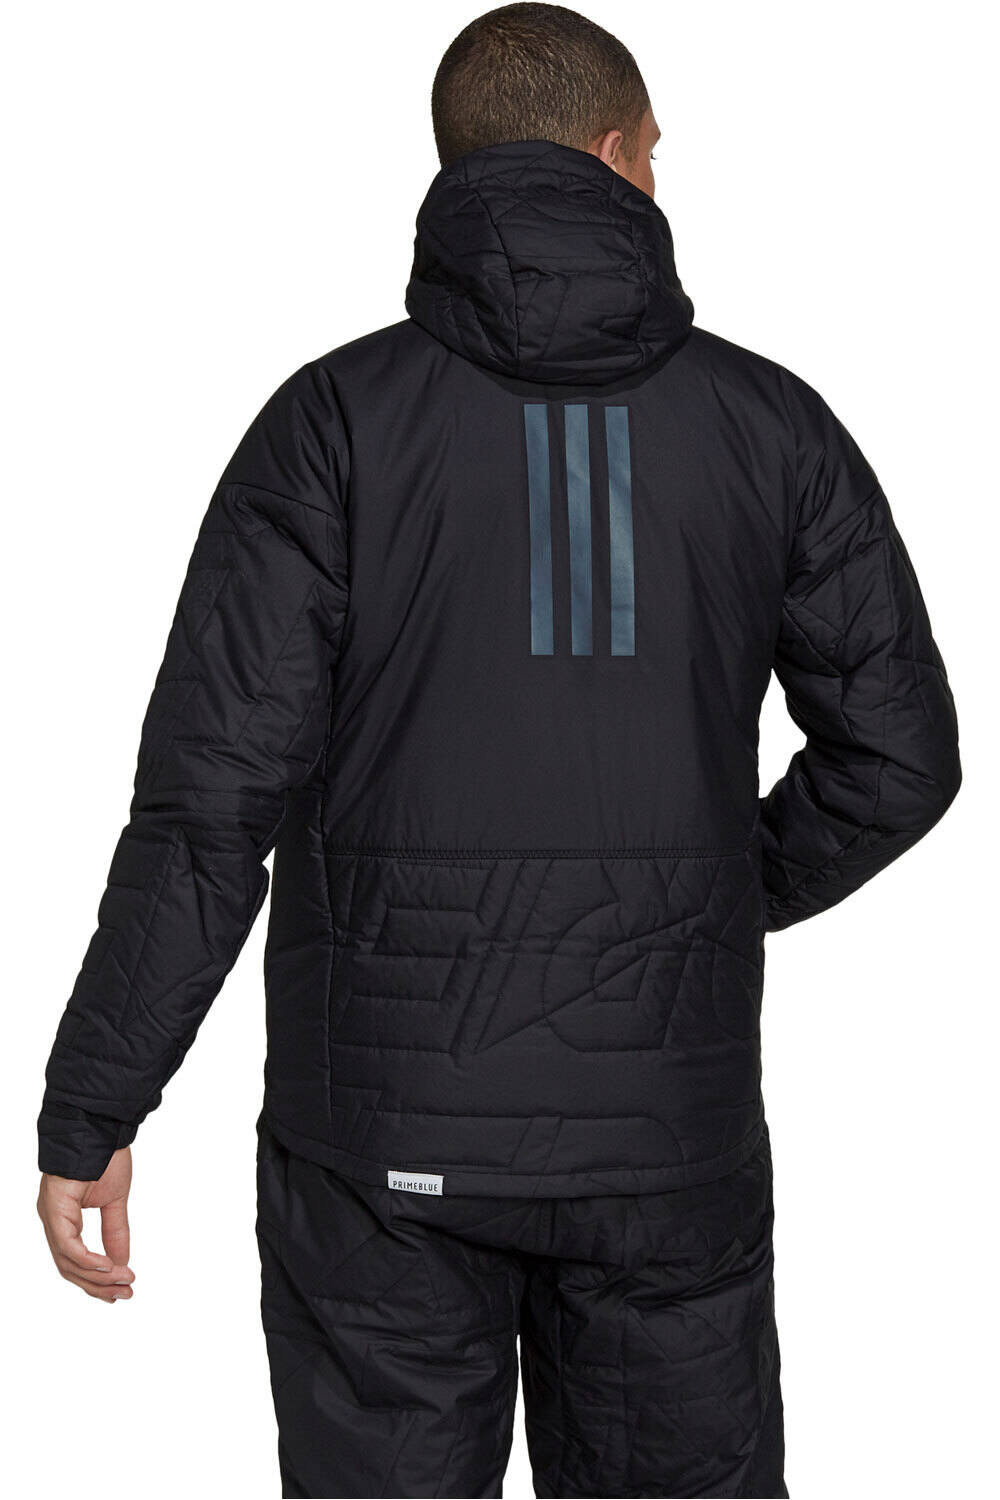 adidas chaqueta outdoor hombre Terrex MYSHELTER PrimaLoft acolchada con capucha vista trasera